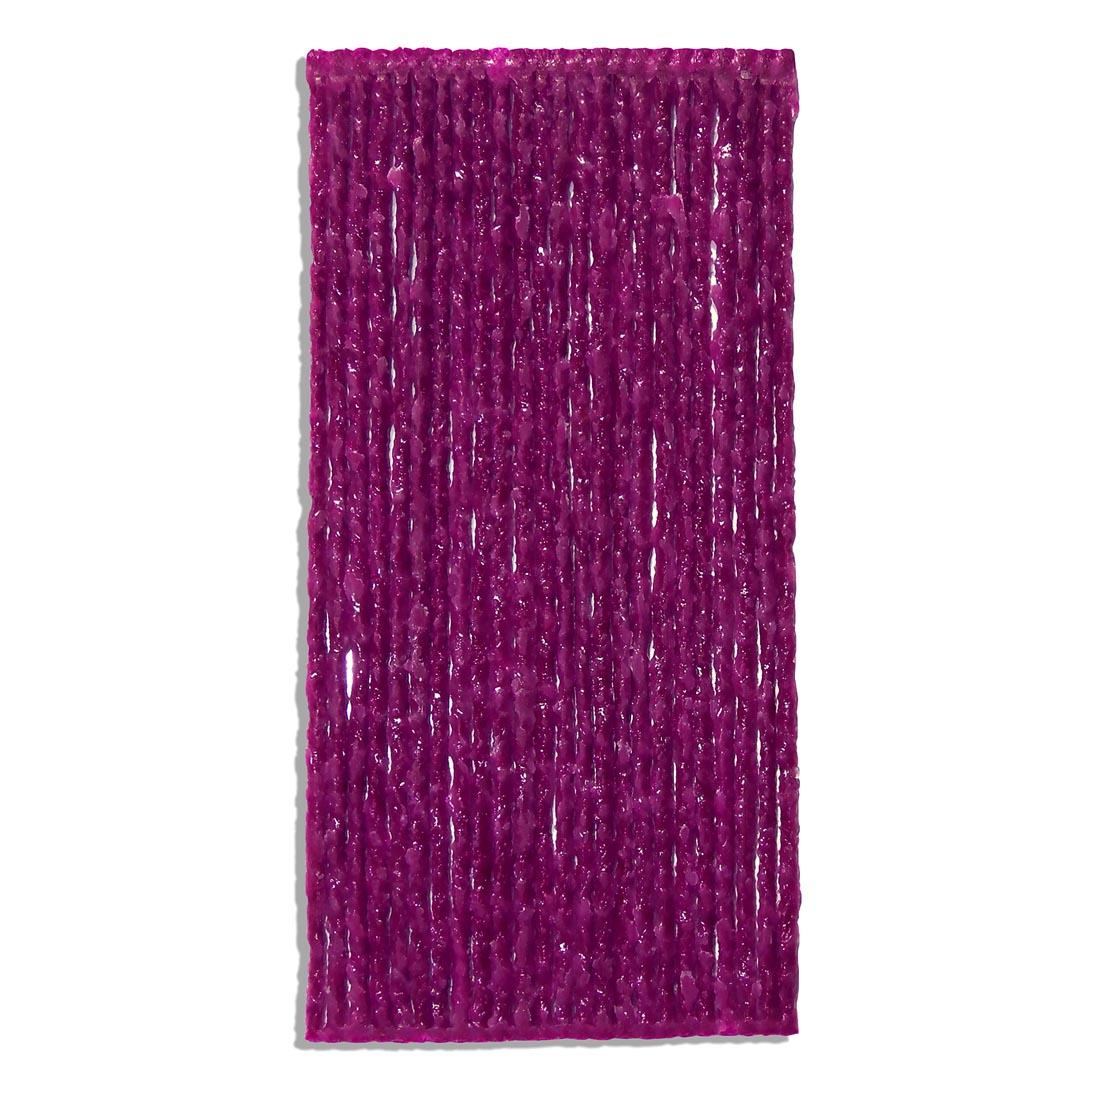 yarn pieces coated with purple wax